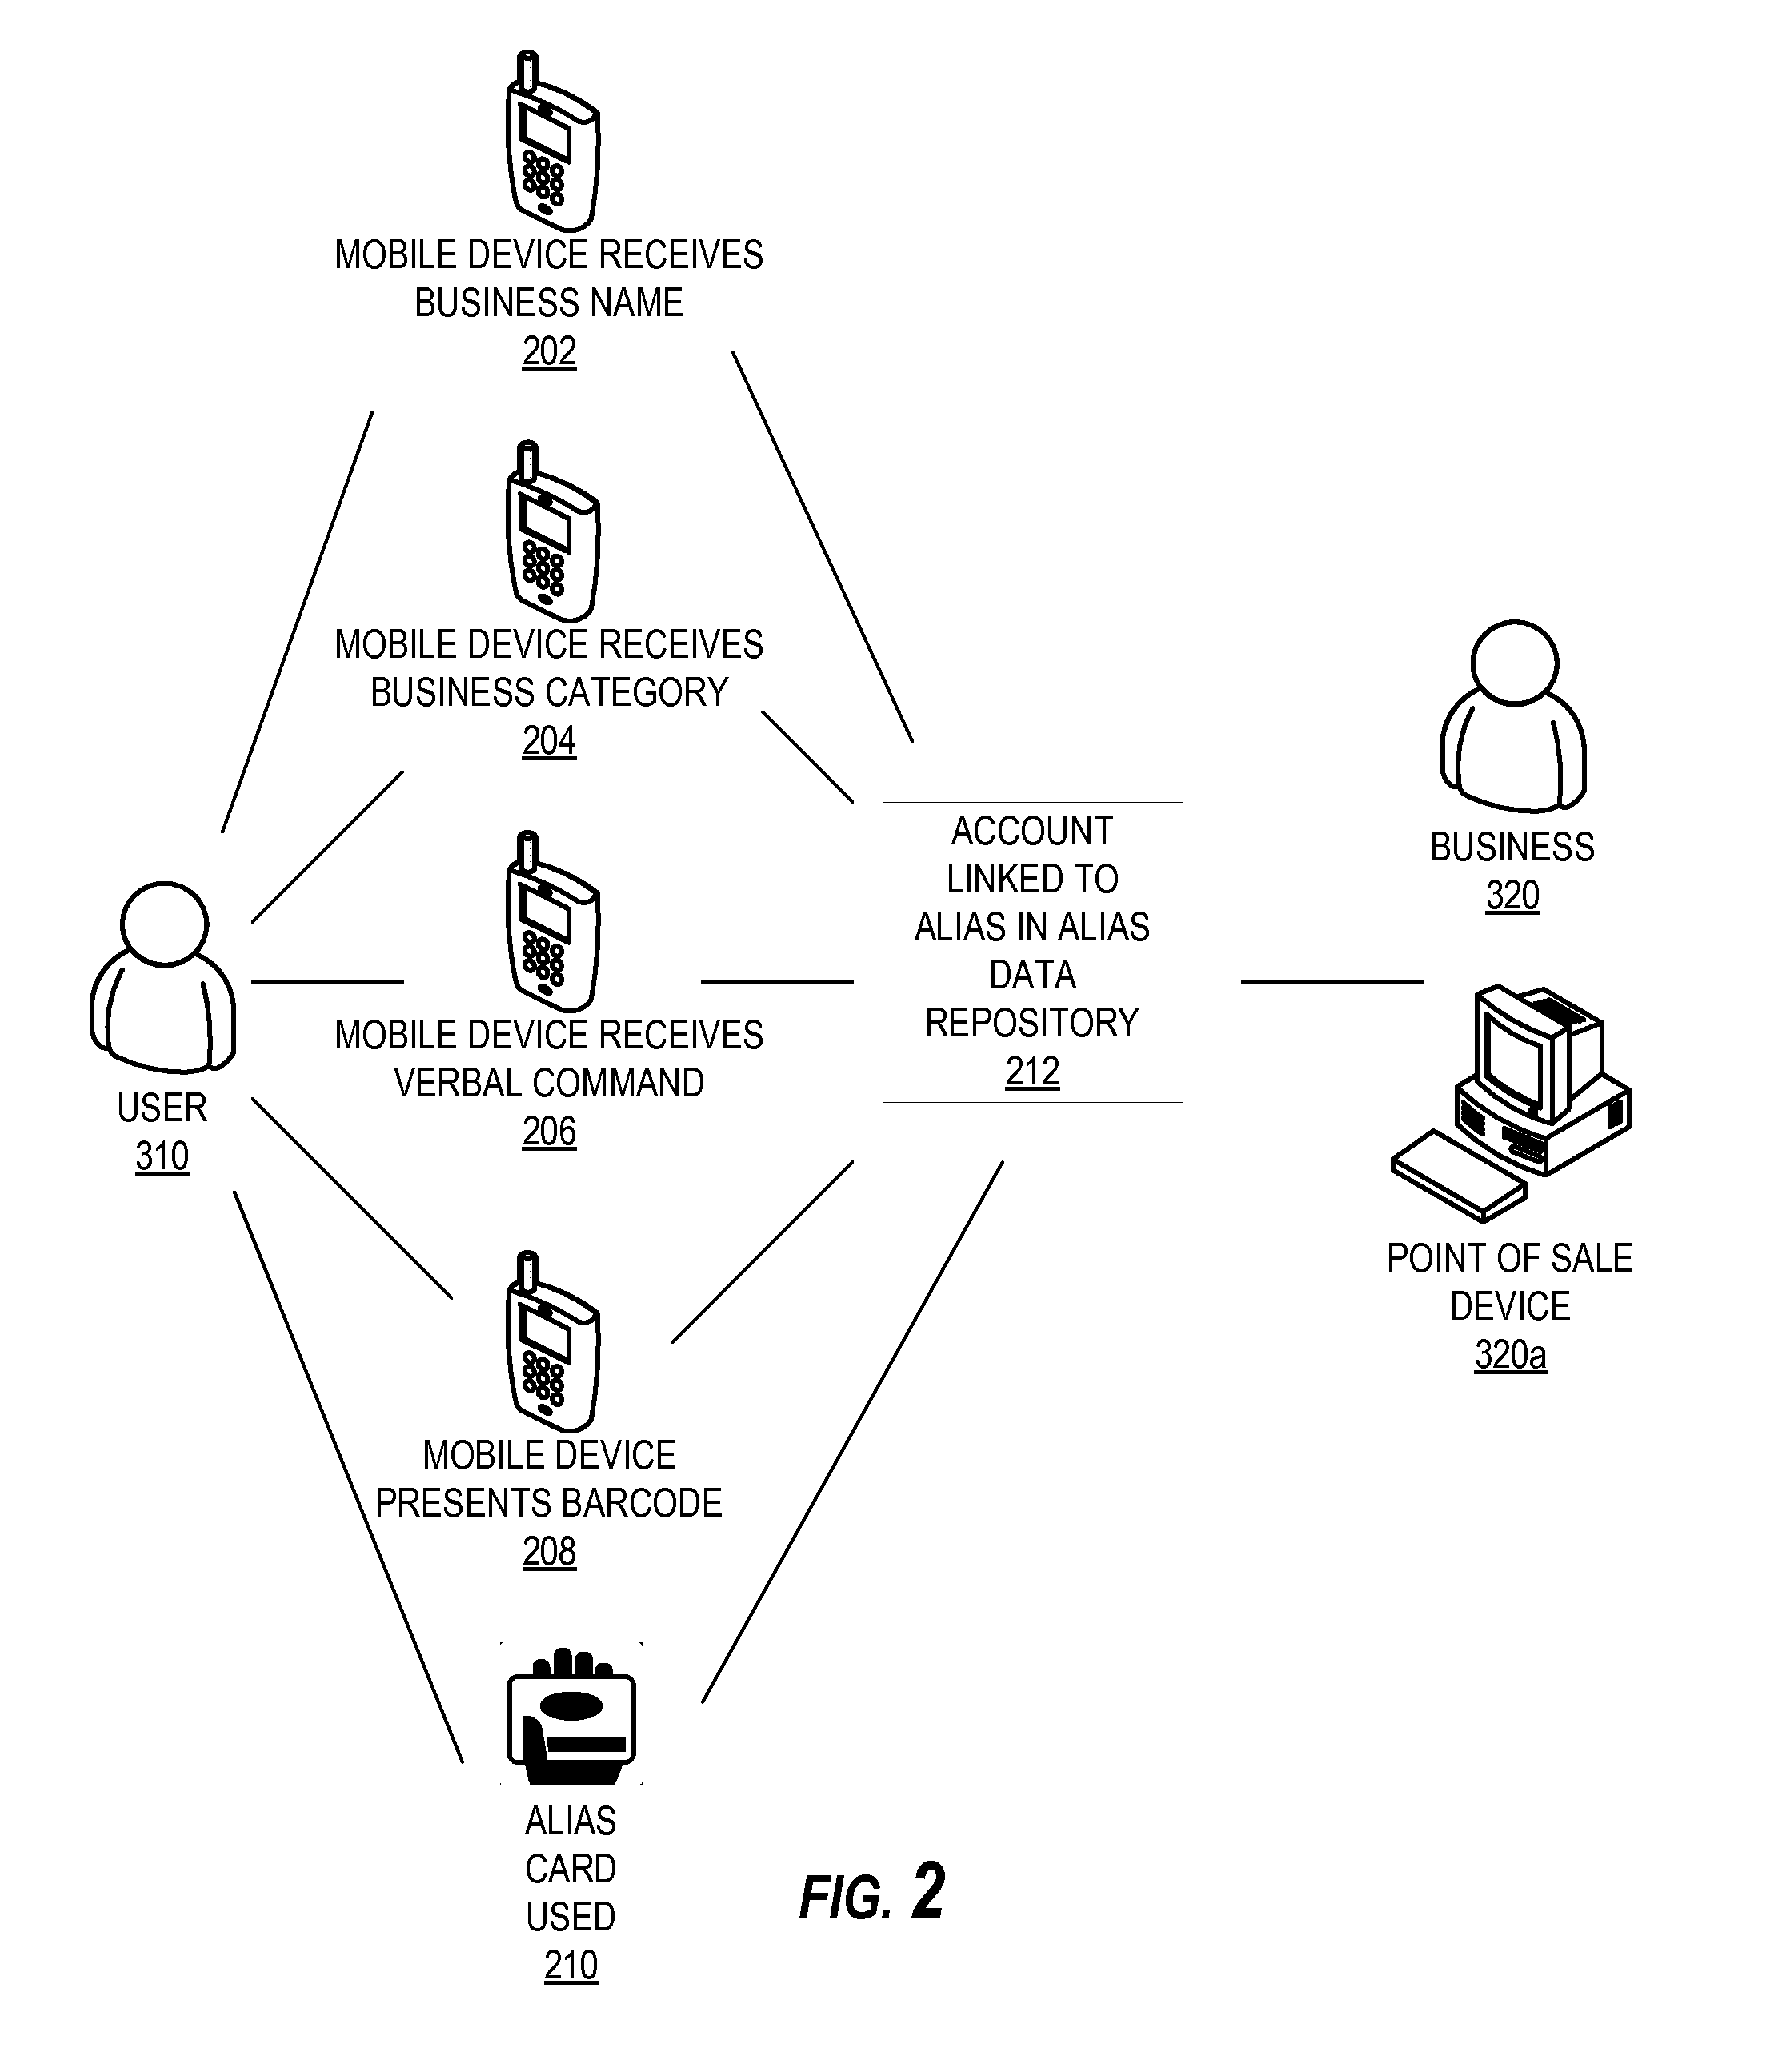 Alias-based merchant transaction system